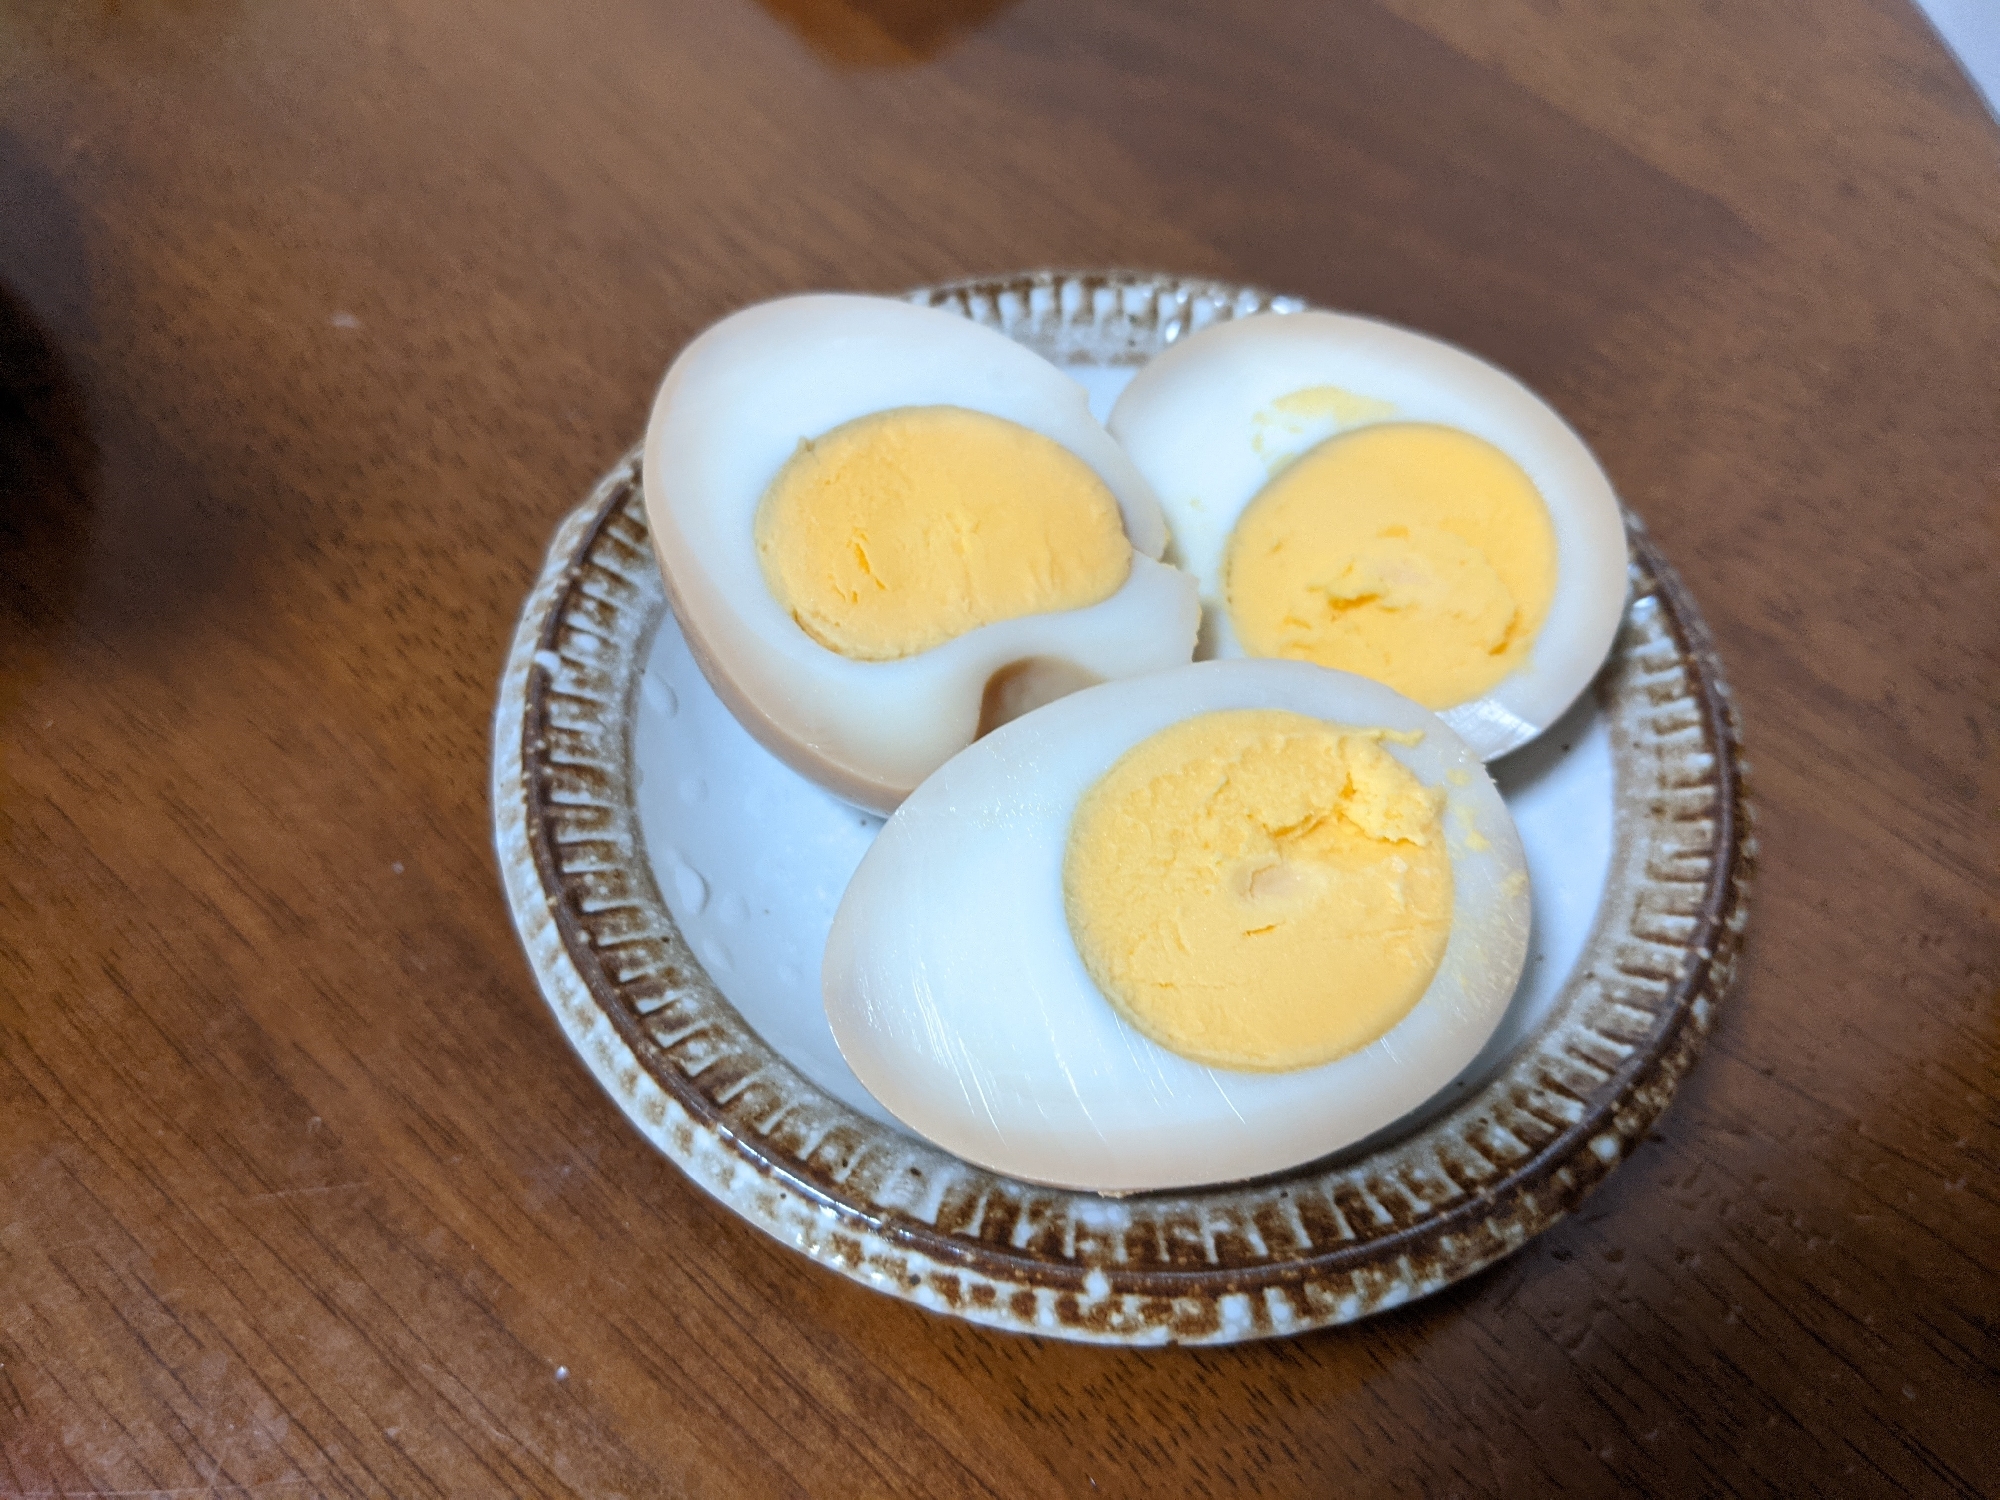 煮卵